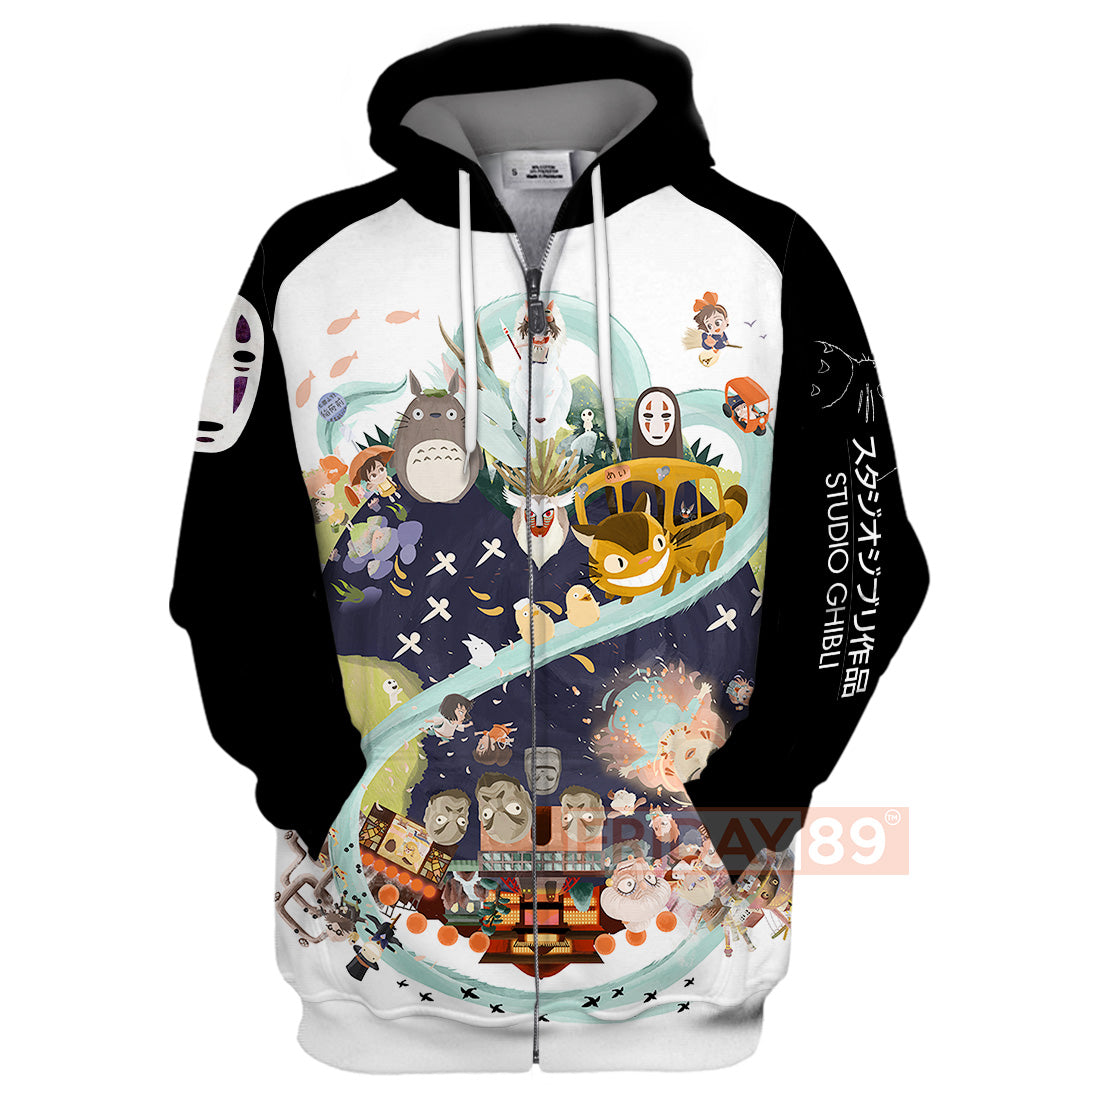 Unifinz GB Hoodie GB All Character Adorable Chibi Art Totoro Spirited Away 3D T-shirt Amazing High Quality GB Shirt Sweater Tank 2026